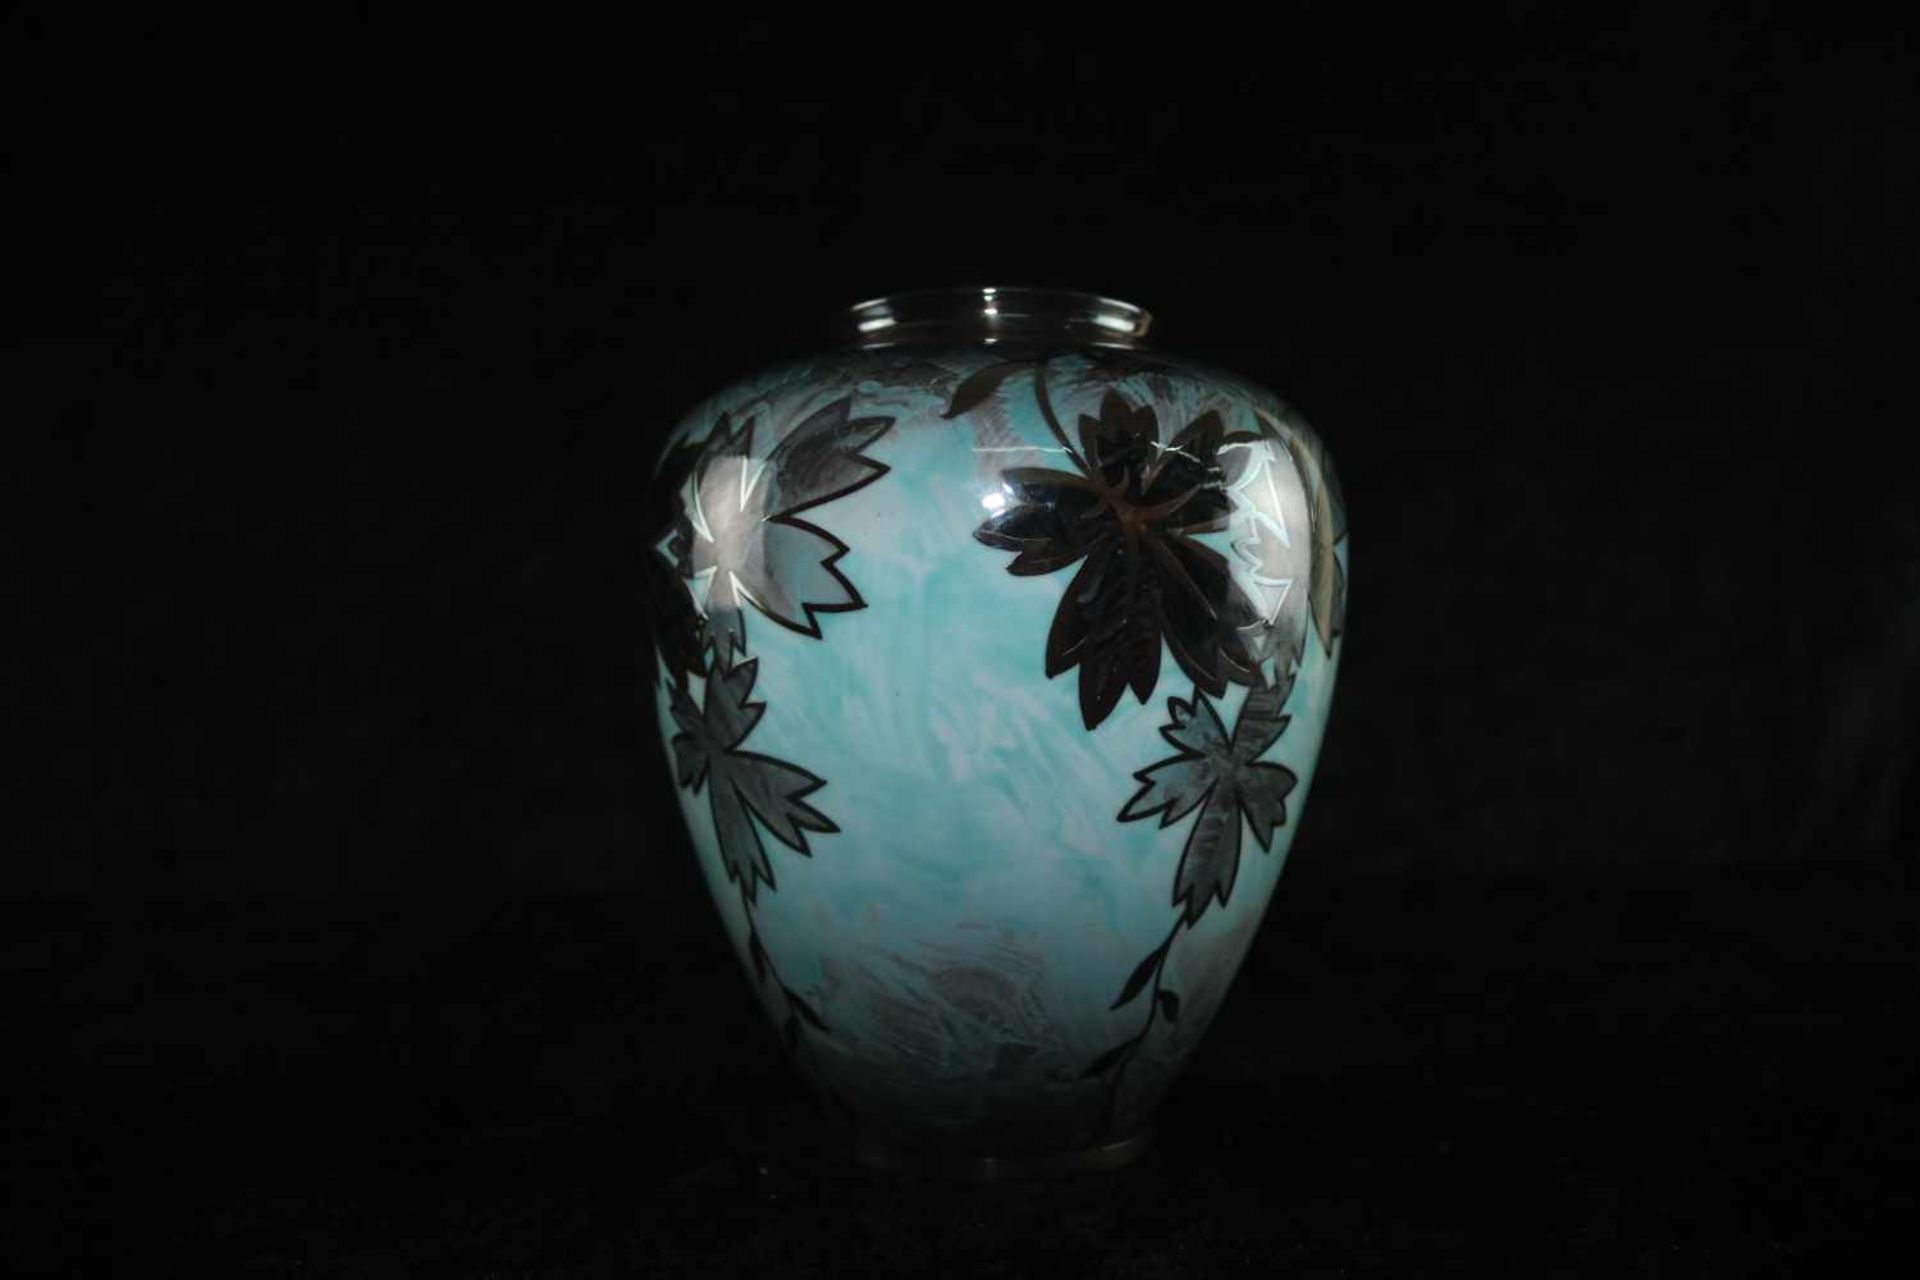 Porzellanmanufraktur Jäger & Co, PmR Bayern, türkise Vase mit schwarzen Ahornblätter, 1950-90 Made - Image 2 of 5